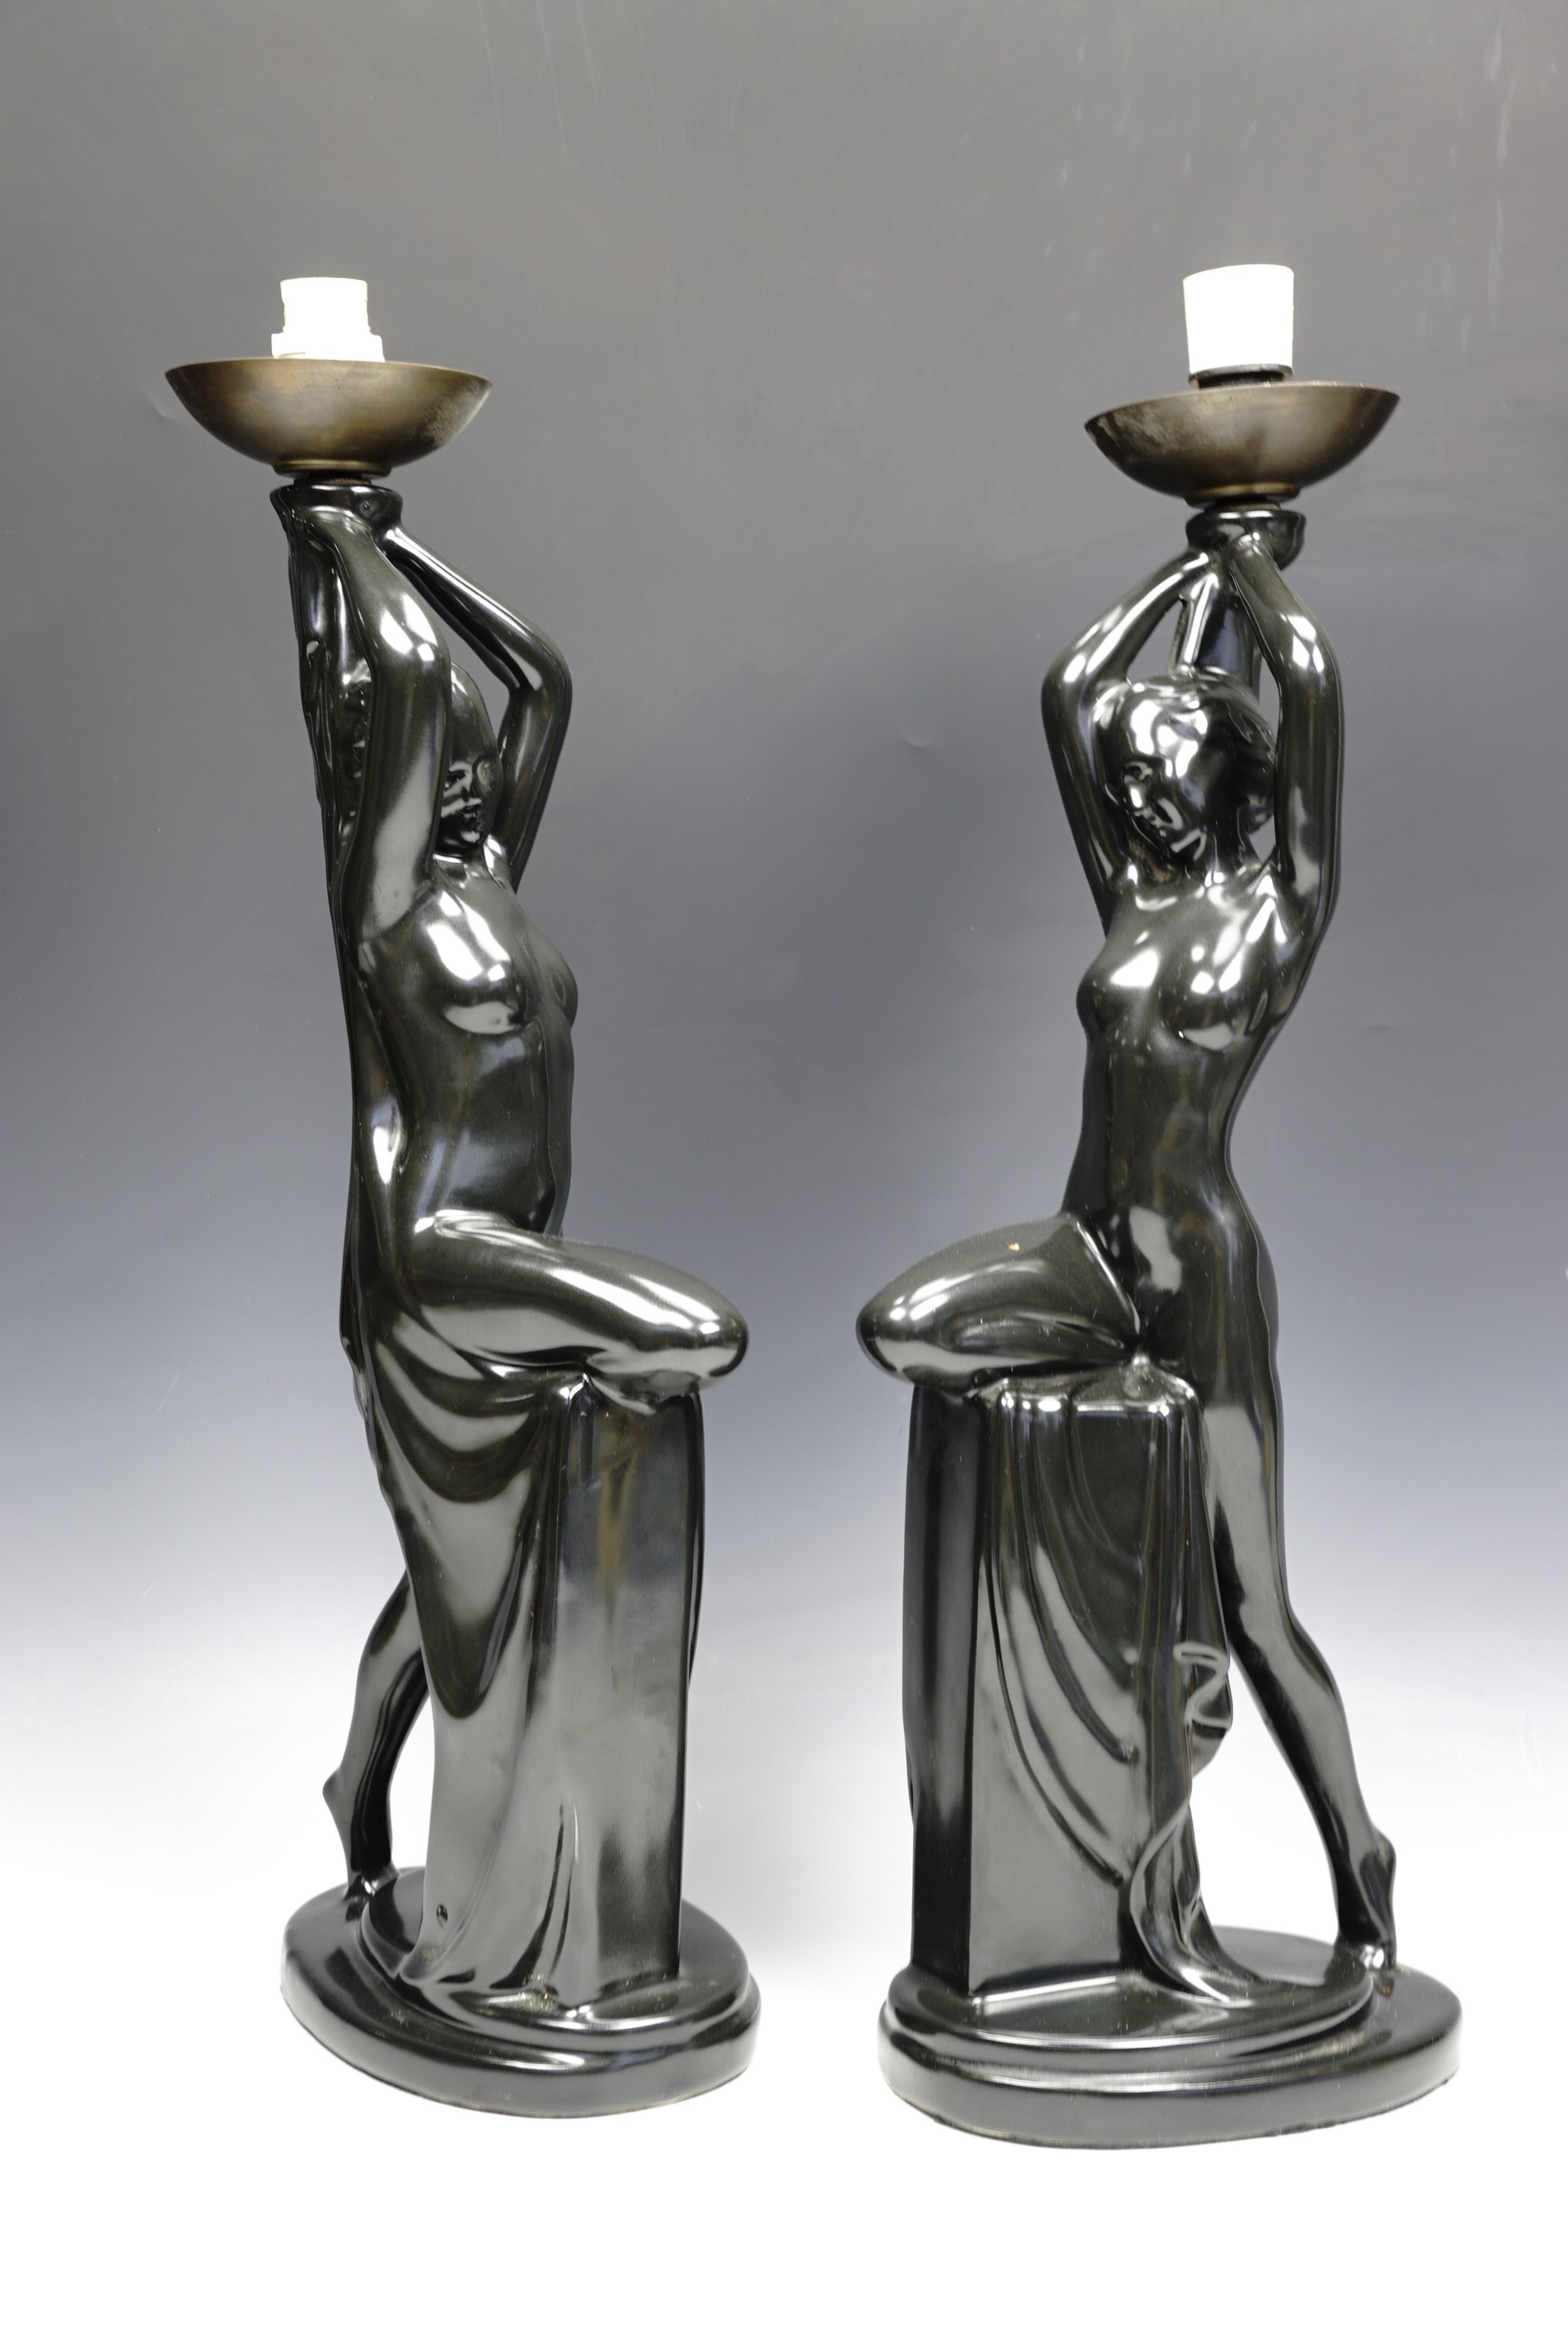 A pair of Art Nouveau influenced black glazed ceramic figural table lamps, 52 cm